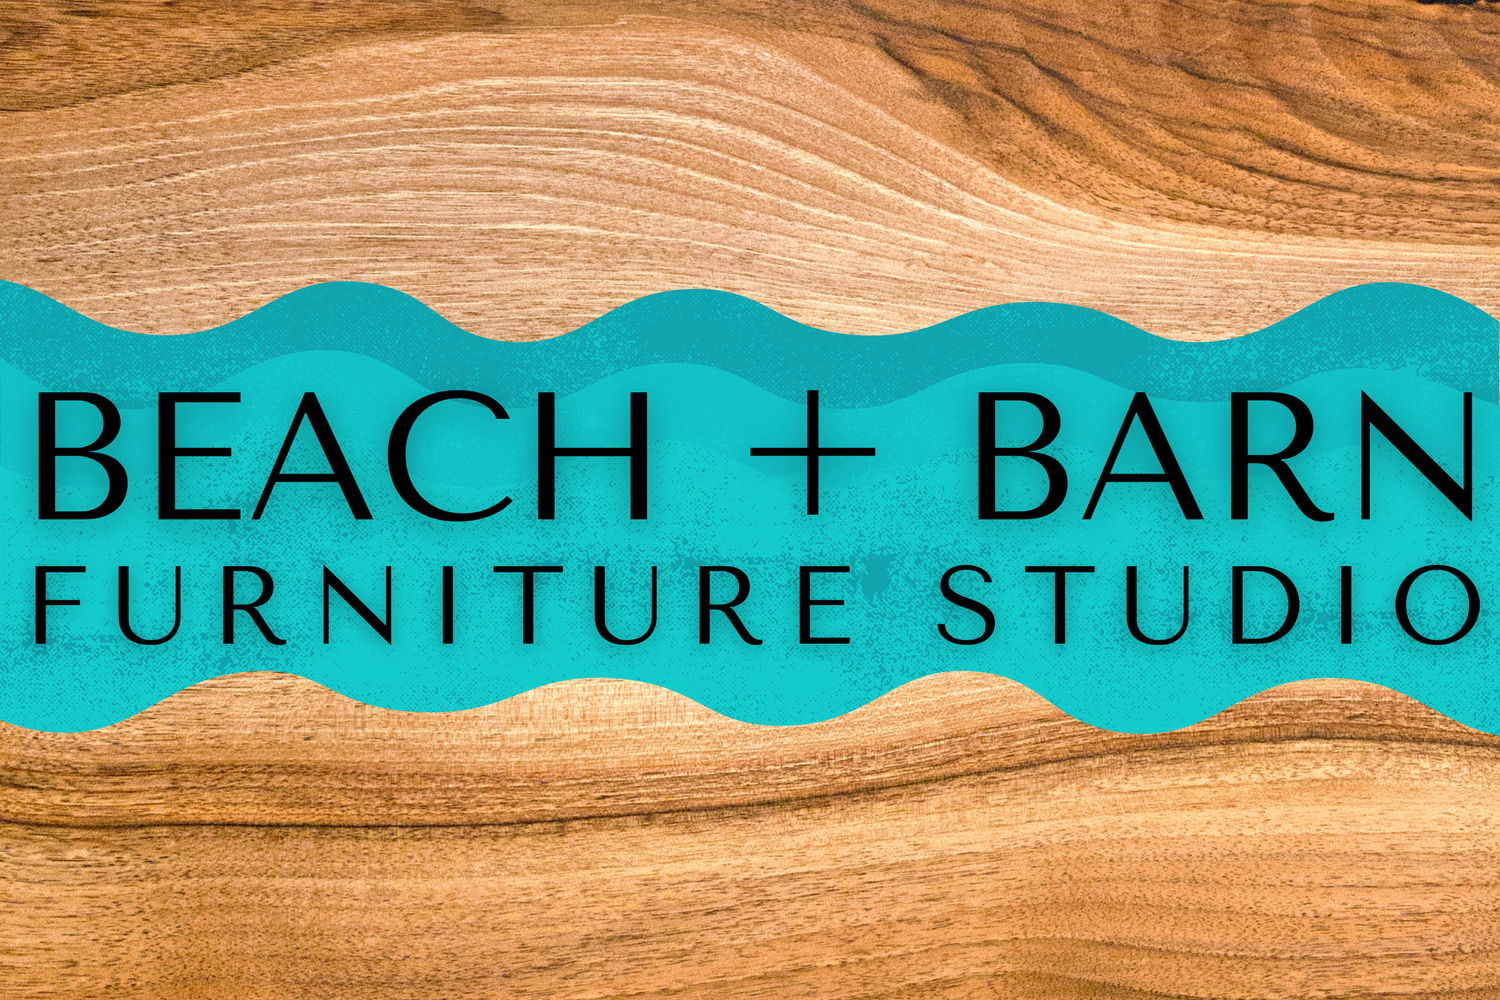 Beach + Barn Furniture Studio